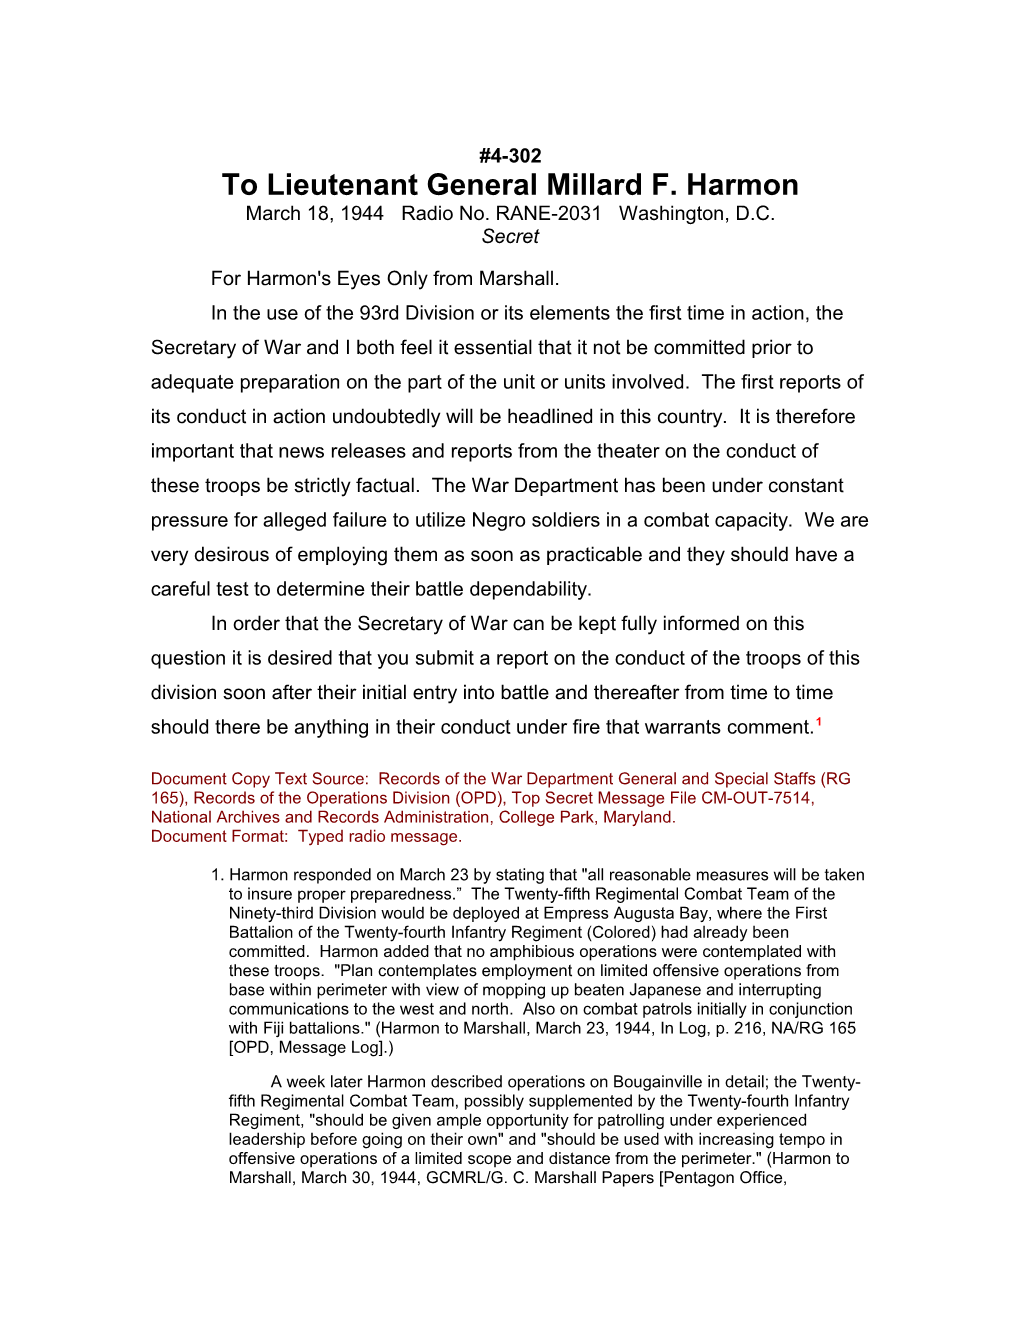 To Lieutenant General Millard F. Harmon